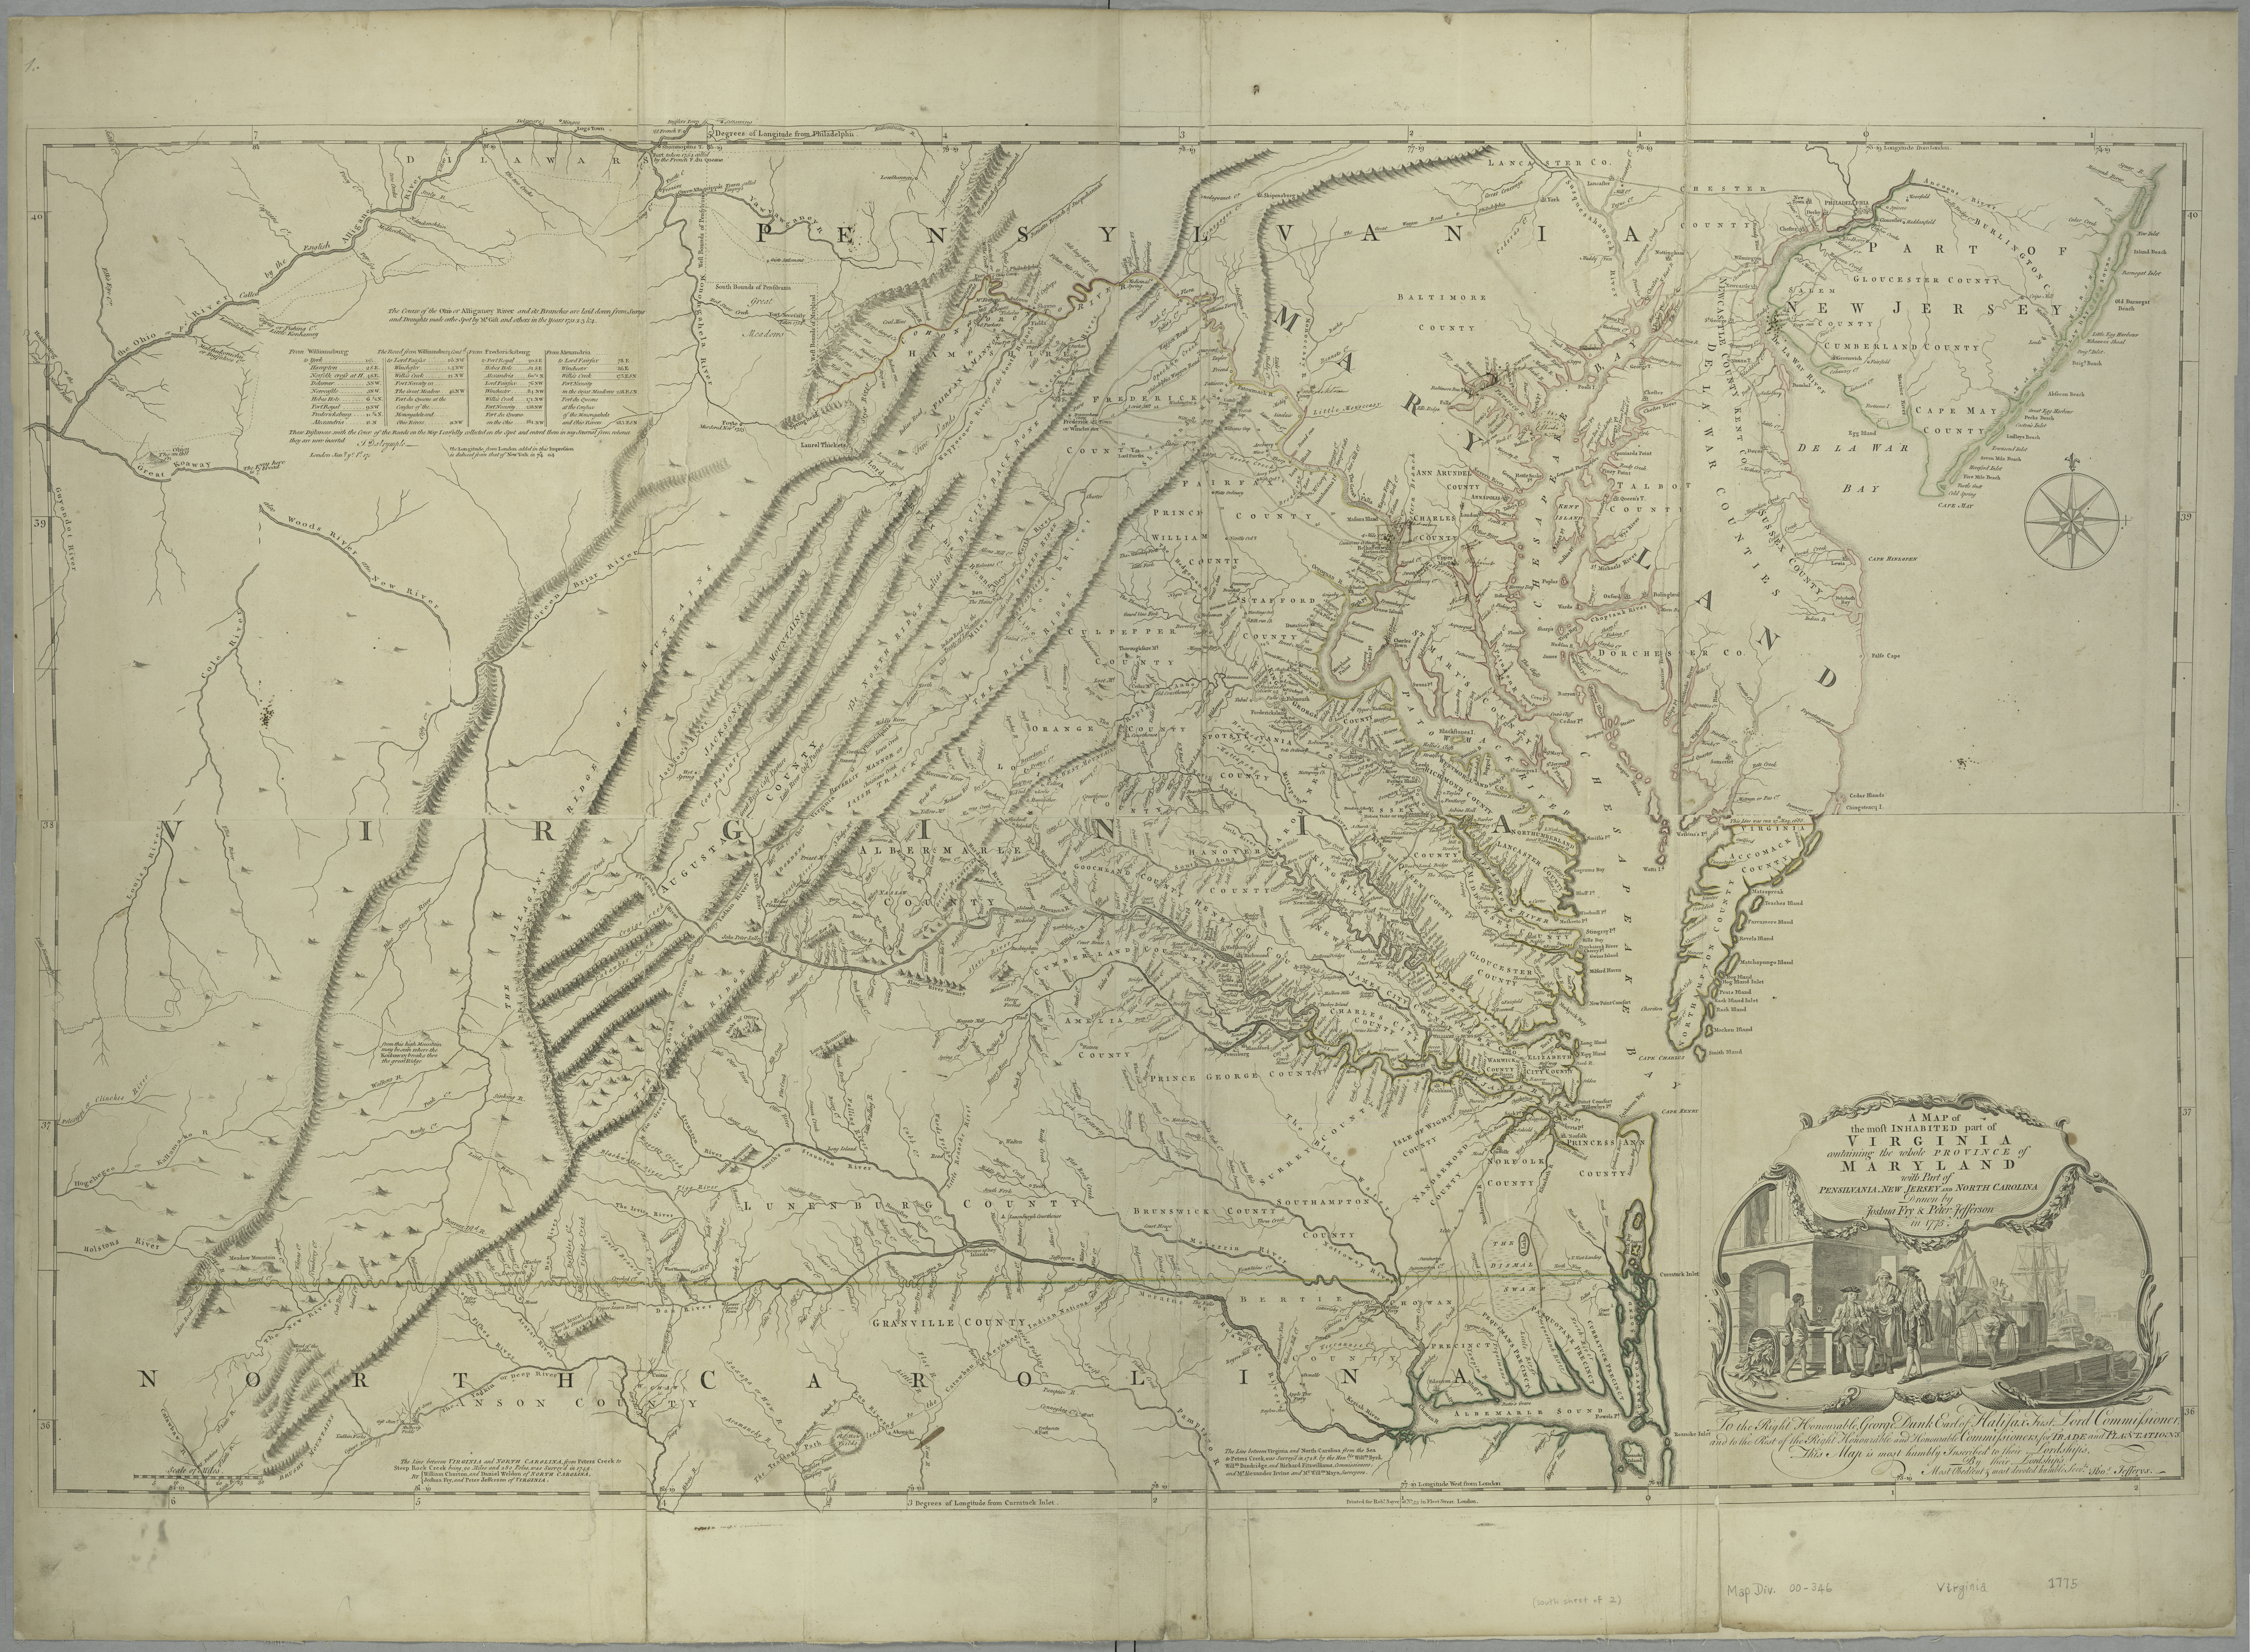 Westham is shown next to Richmond,  Virginia in 1775